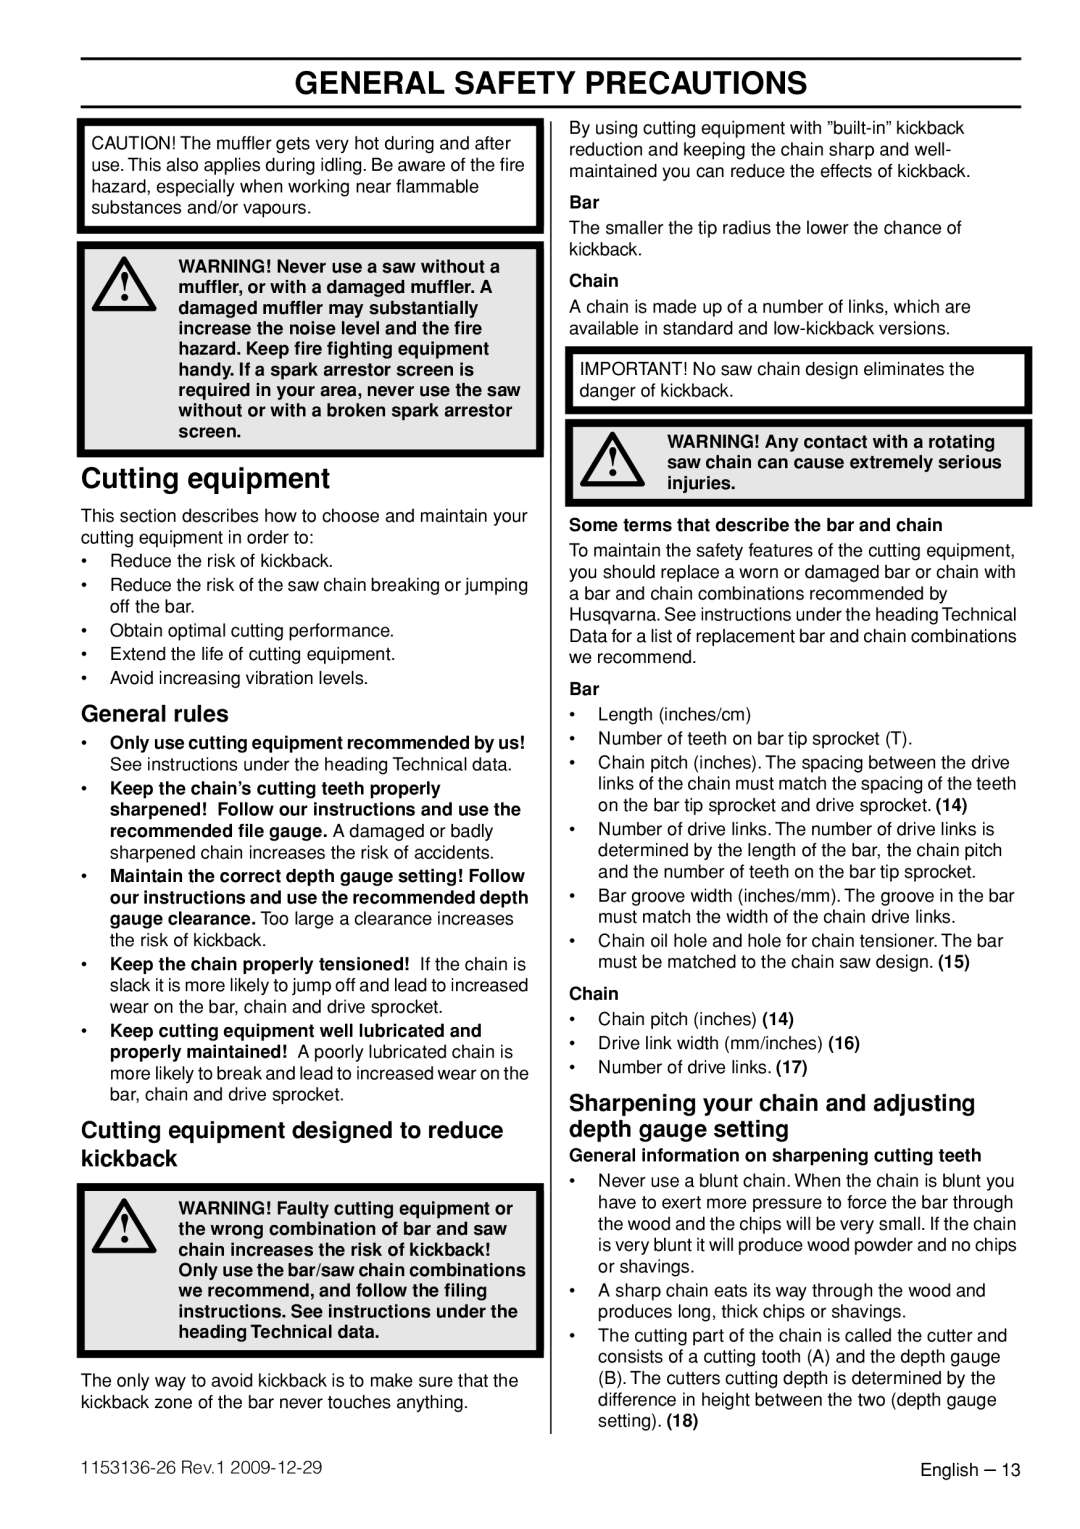 Husqvarna 1153136-26 manual General rules, Cutting equipment designed to reduce kickback, General Safety Precautions 